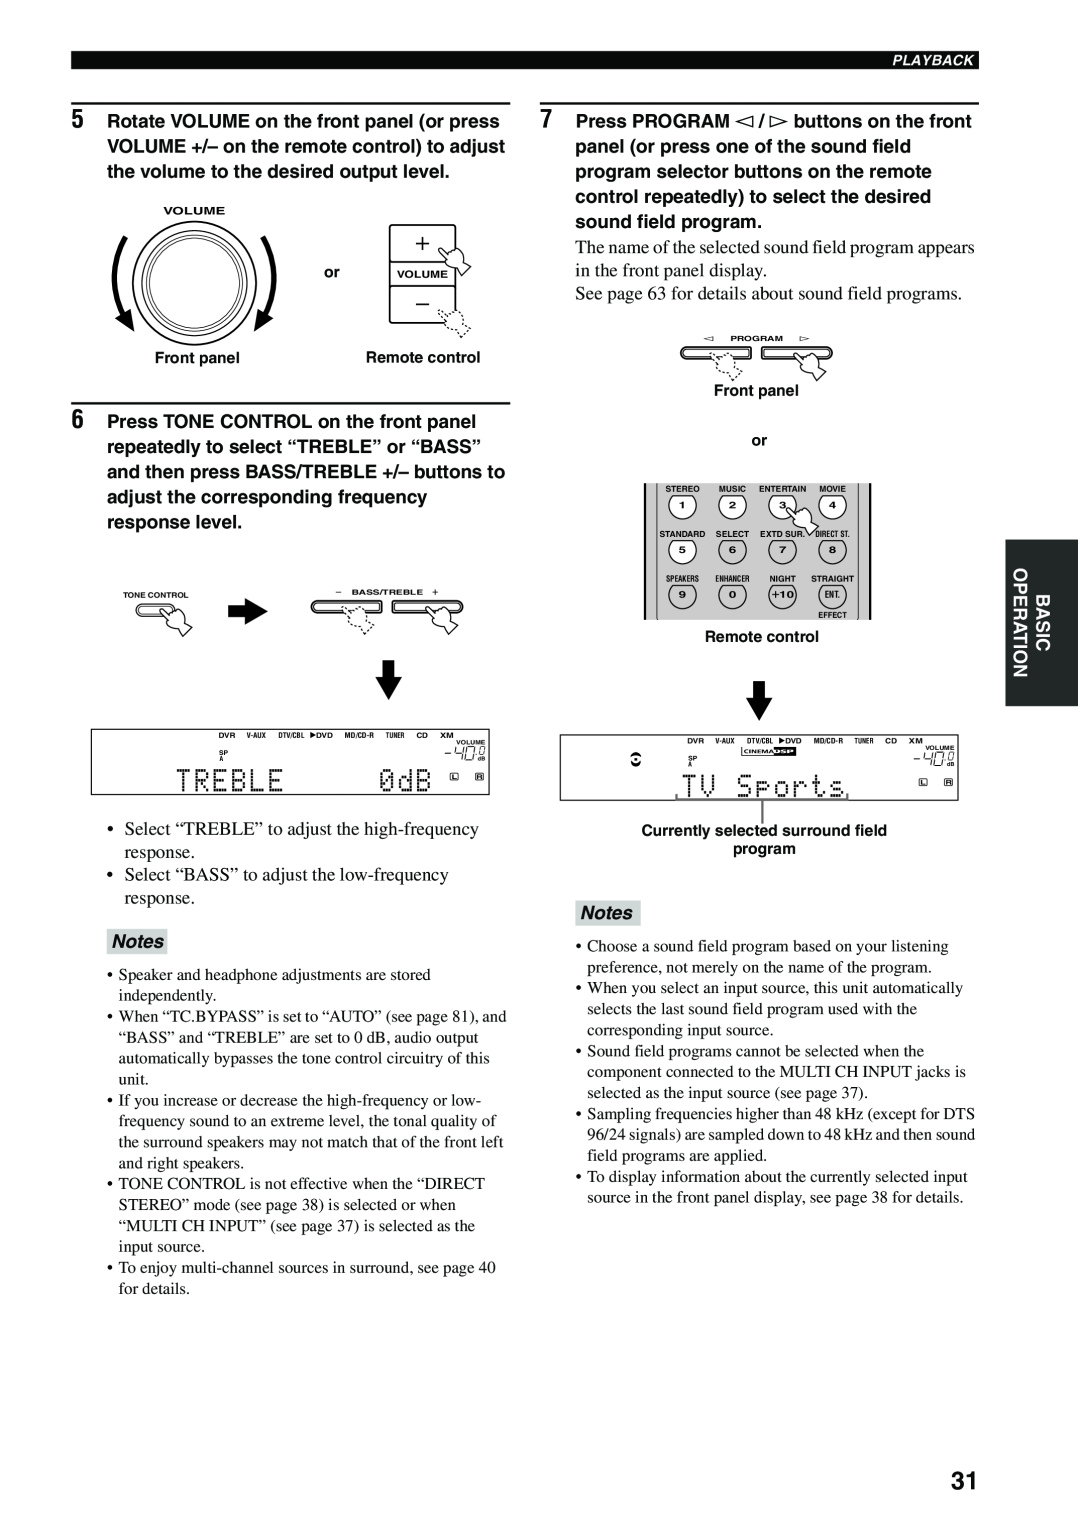 Yamaha HTR-5940 owner manual Treble, 0dB L R, TV Sports, Notes 